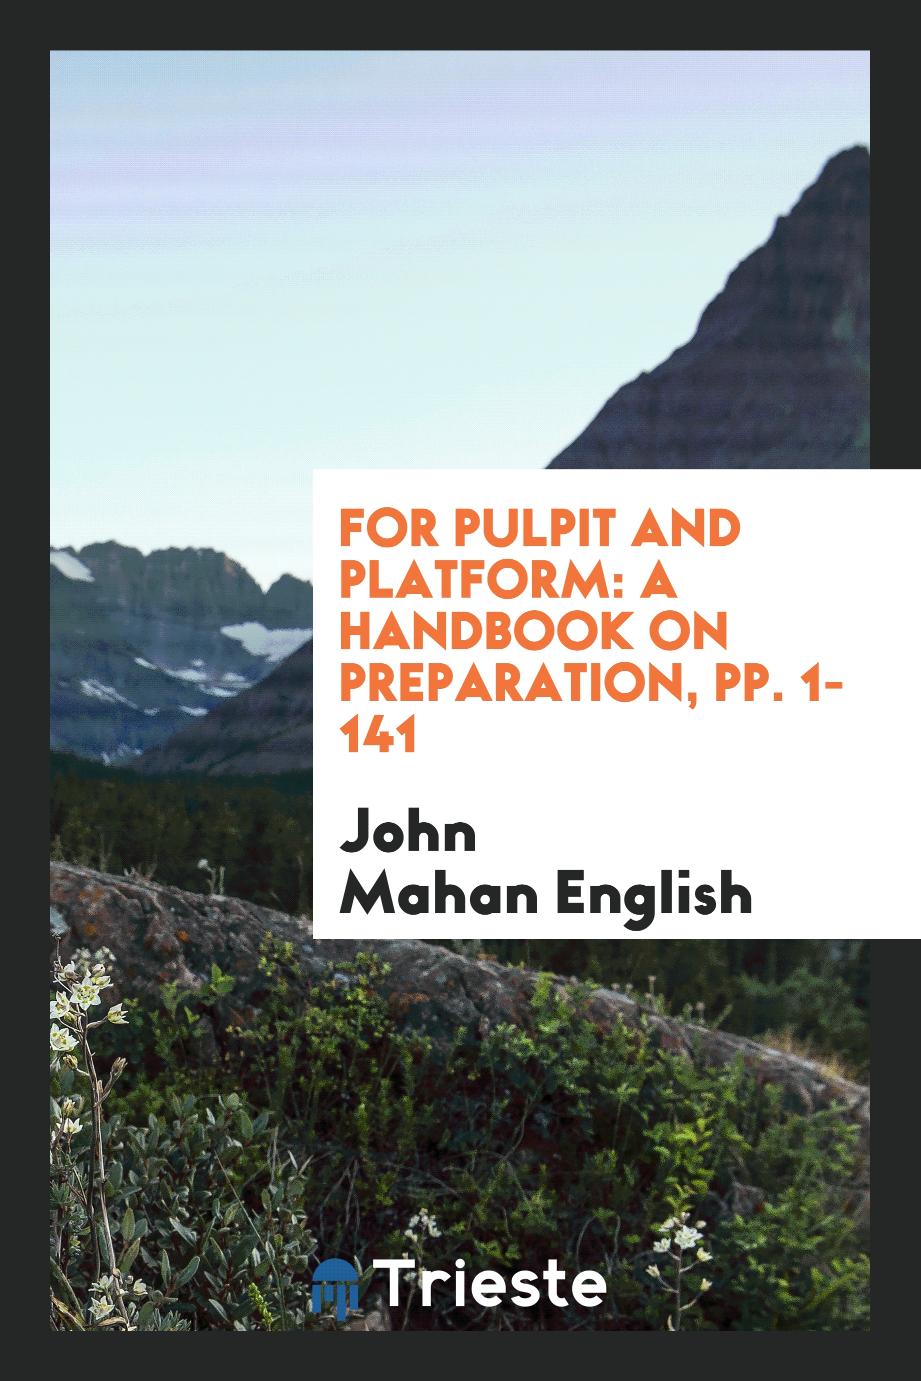 For Pulpit and Platform: A Handbook on Preparation, pp. 1-141